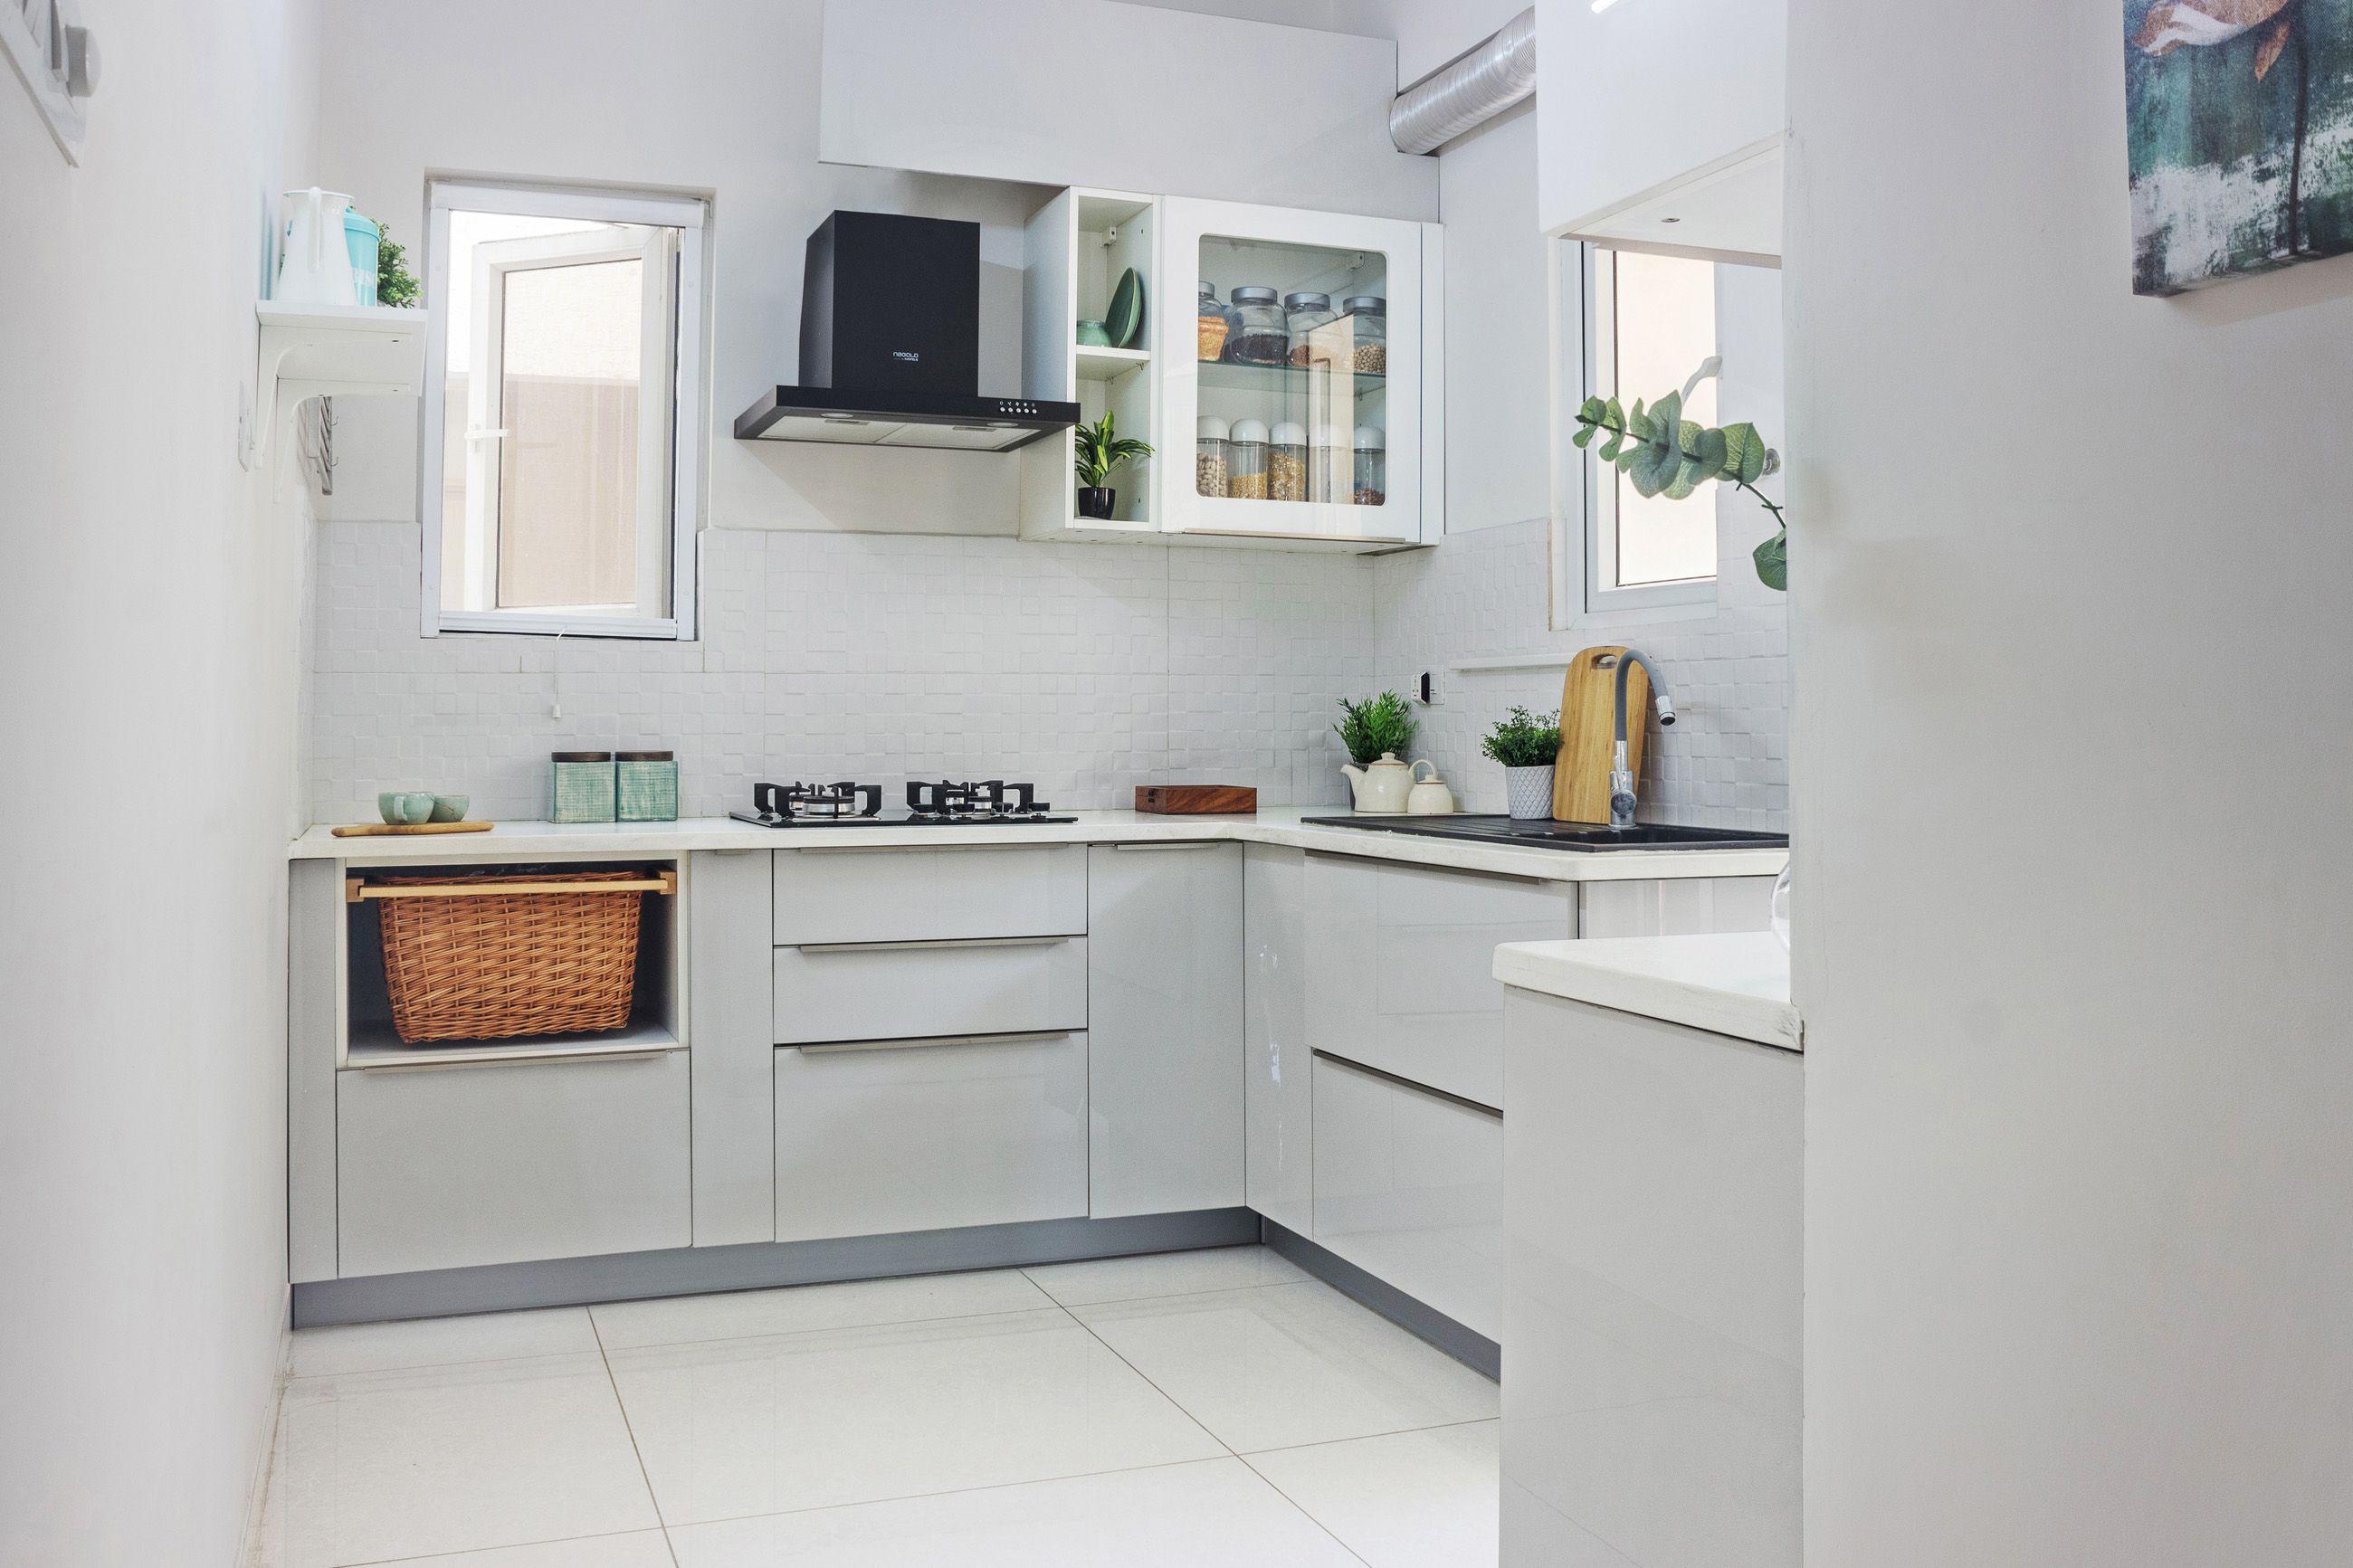 Minmal Frosty White L Shaped Modular Kitchen Design With Mosaic Backsplash